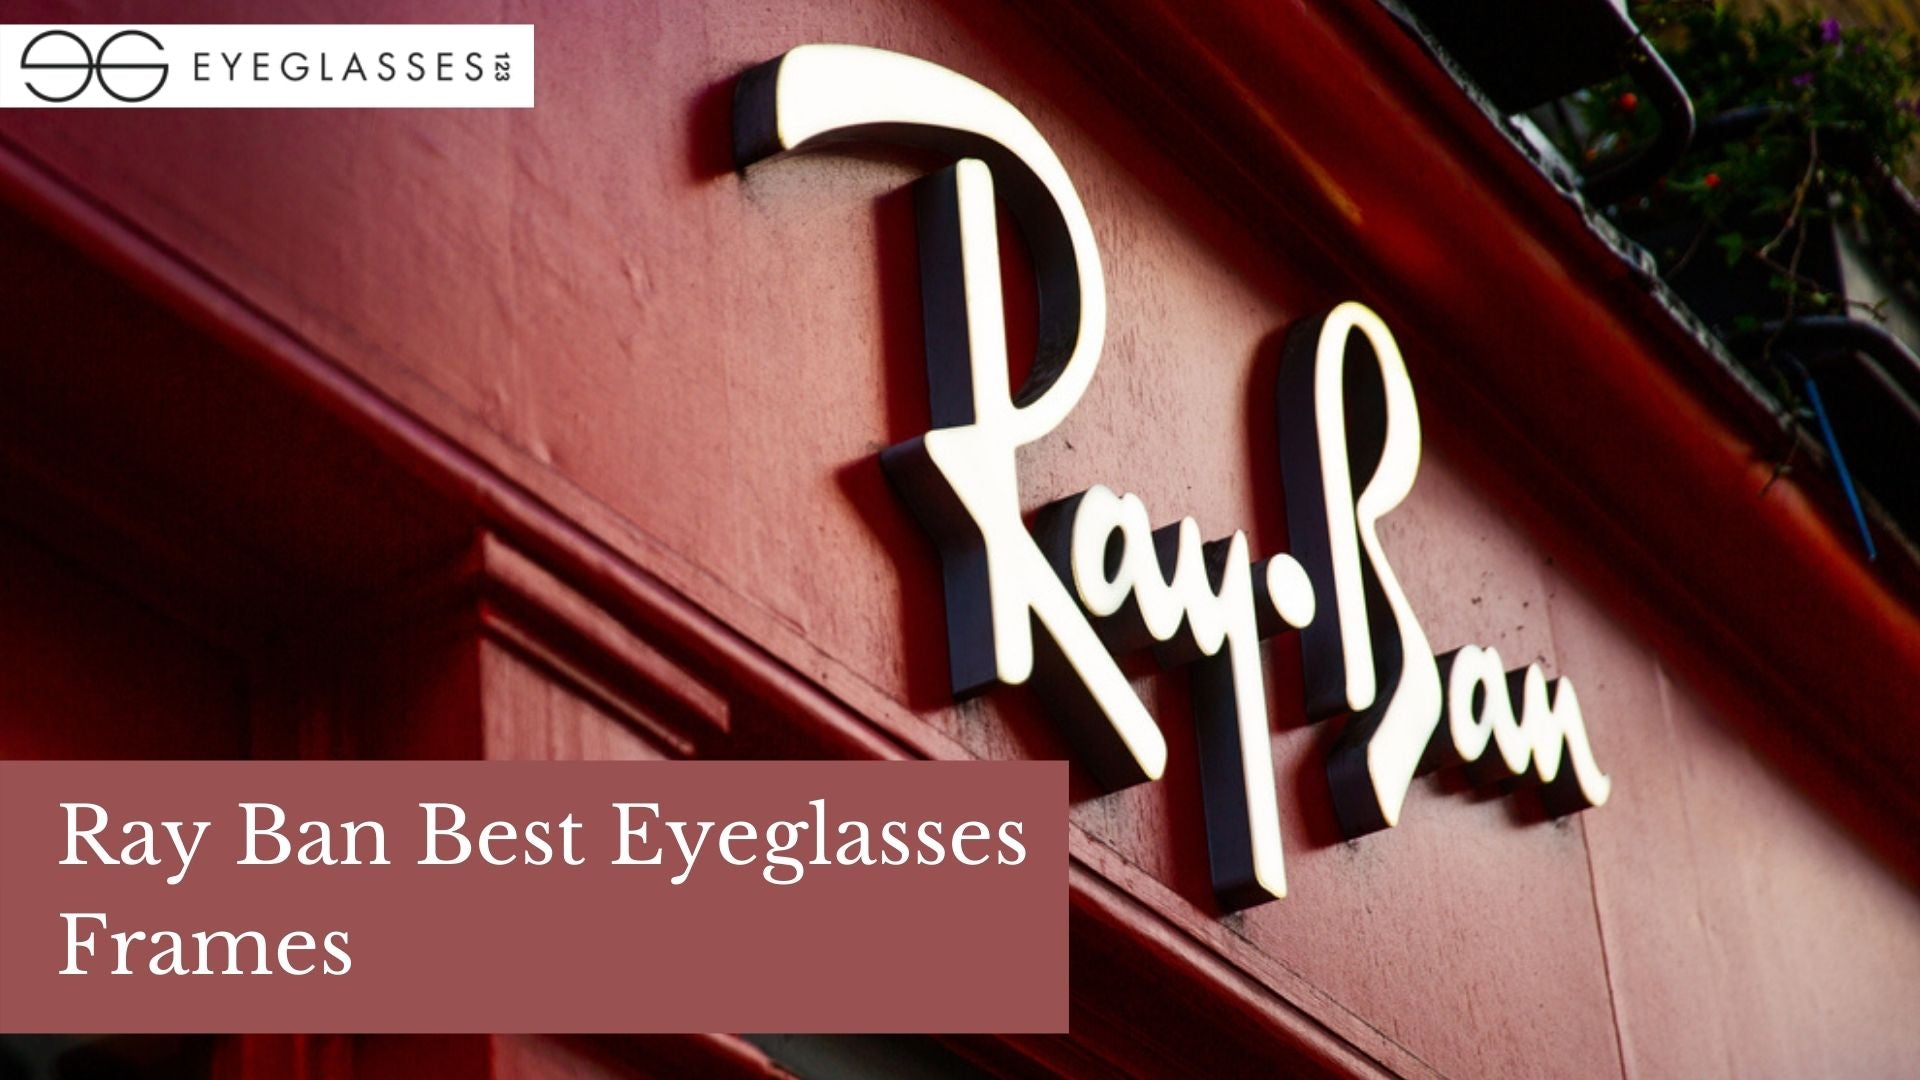 Ray Ban's Best Eyeglasses Frames